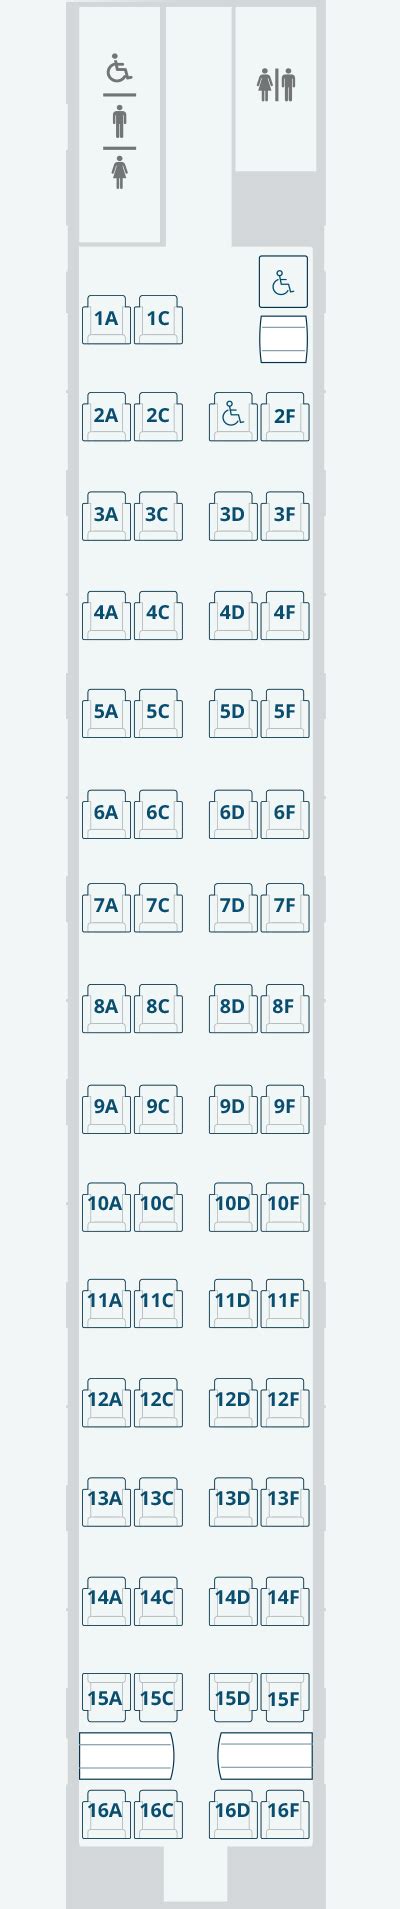 Amtrak Business Class Seating Chart